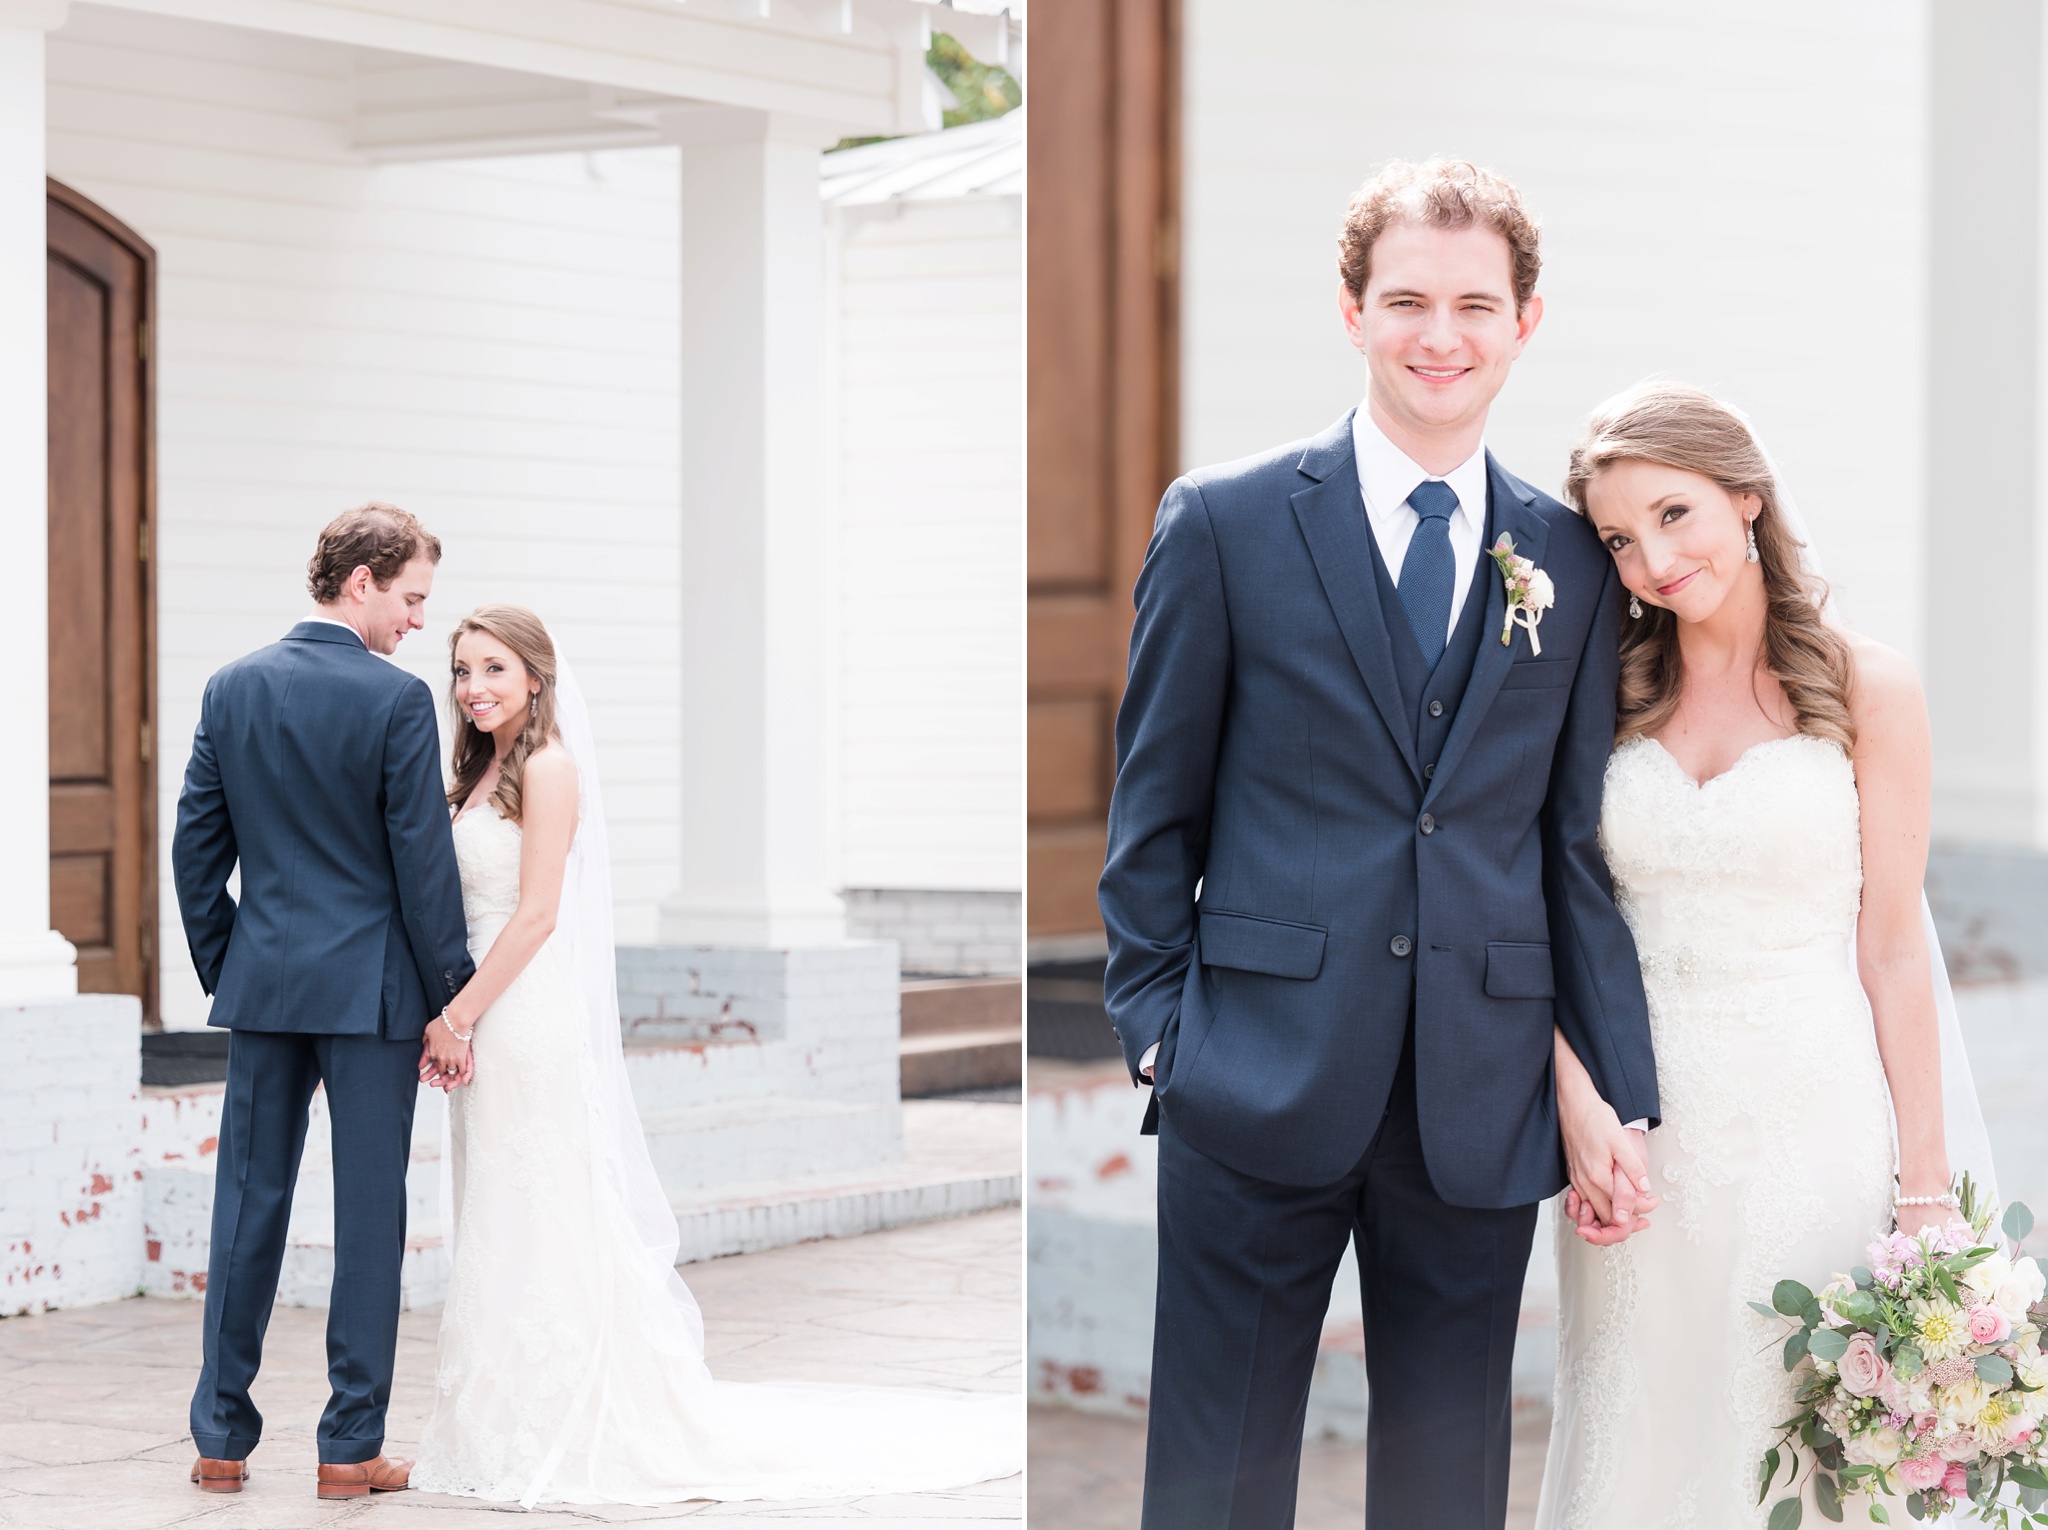 Sonnet House Blush and Gold Spring Wedding | Birmingham Alabama Wedding Photographers_0036.jpg